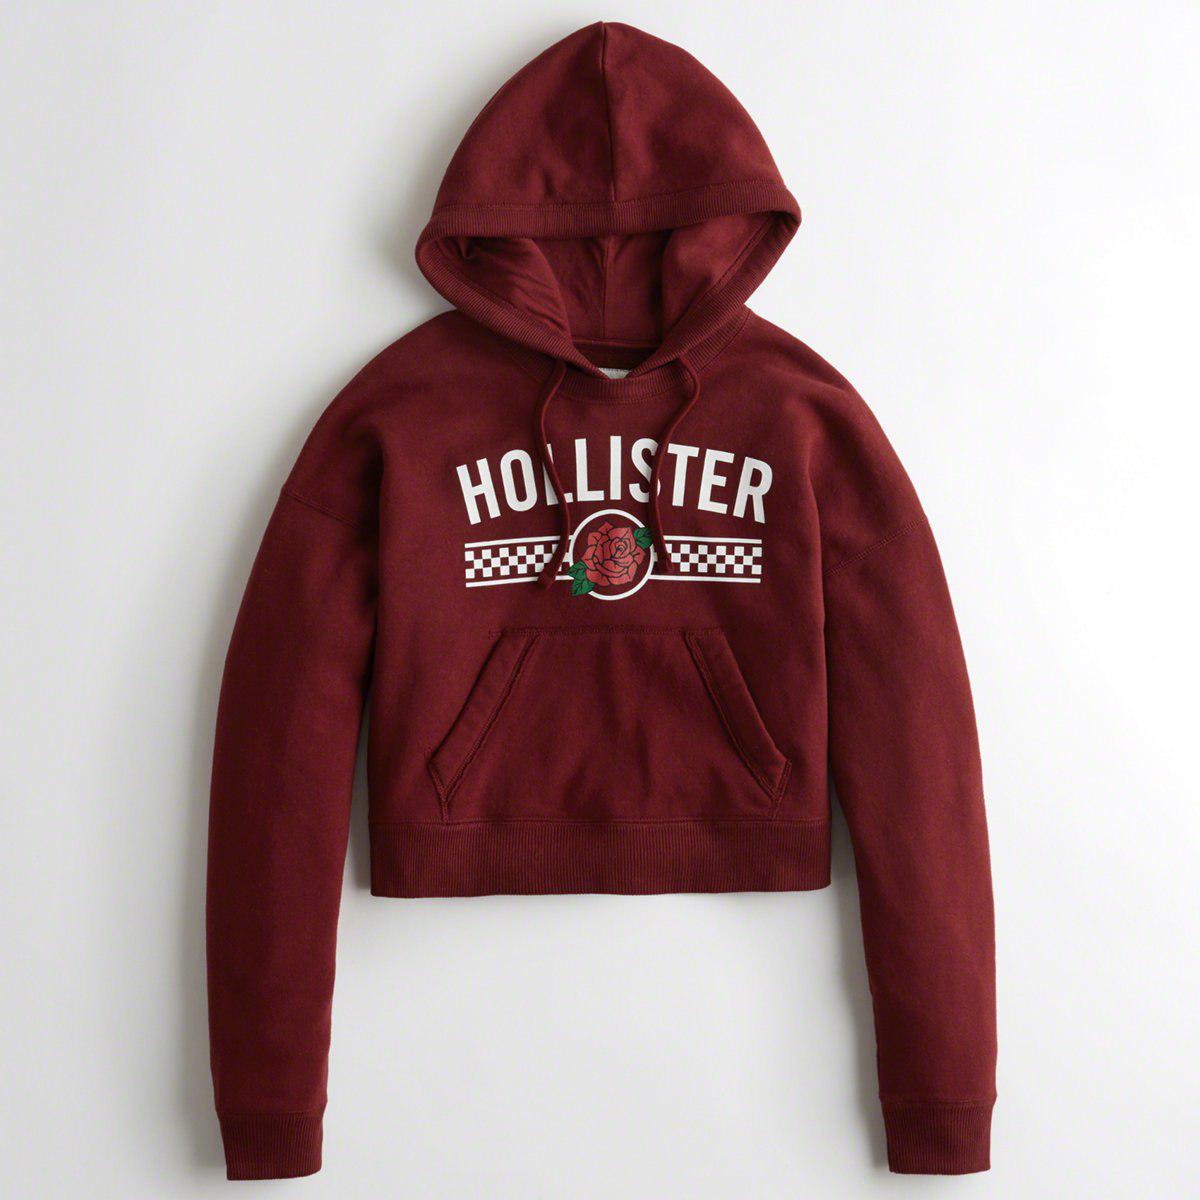 hollister rose sweater